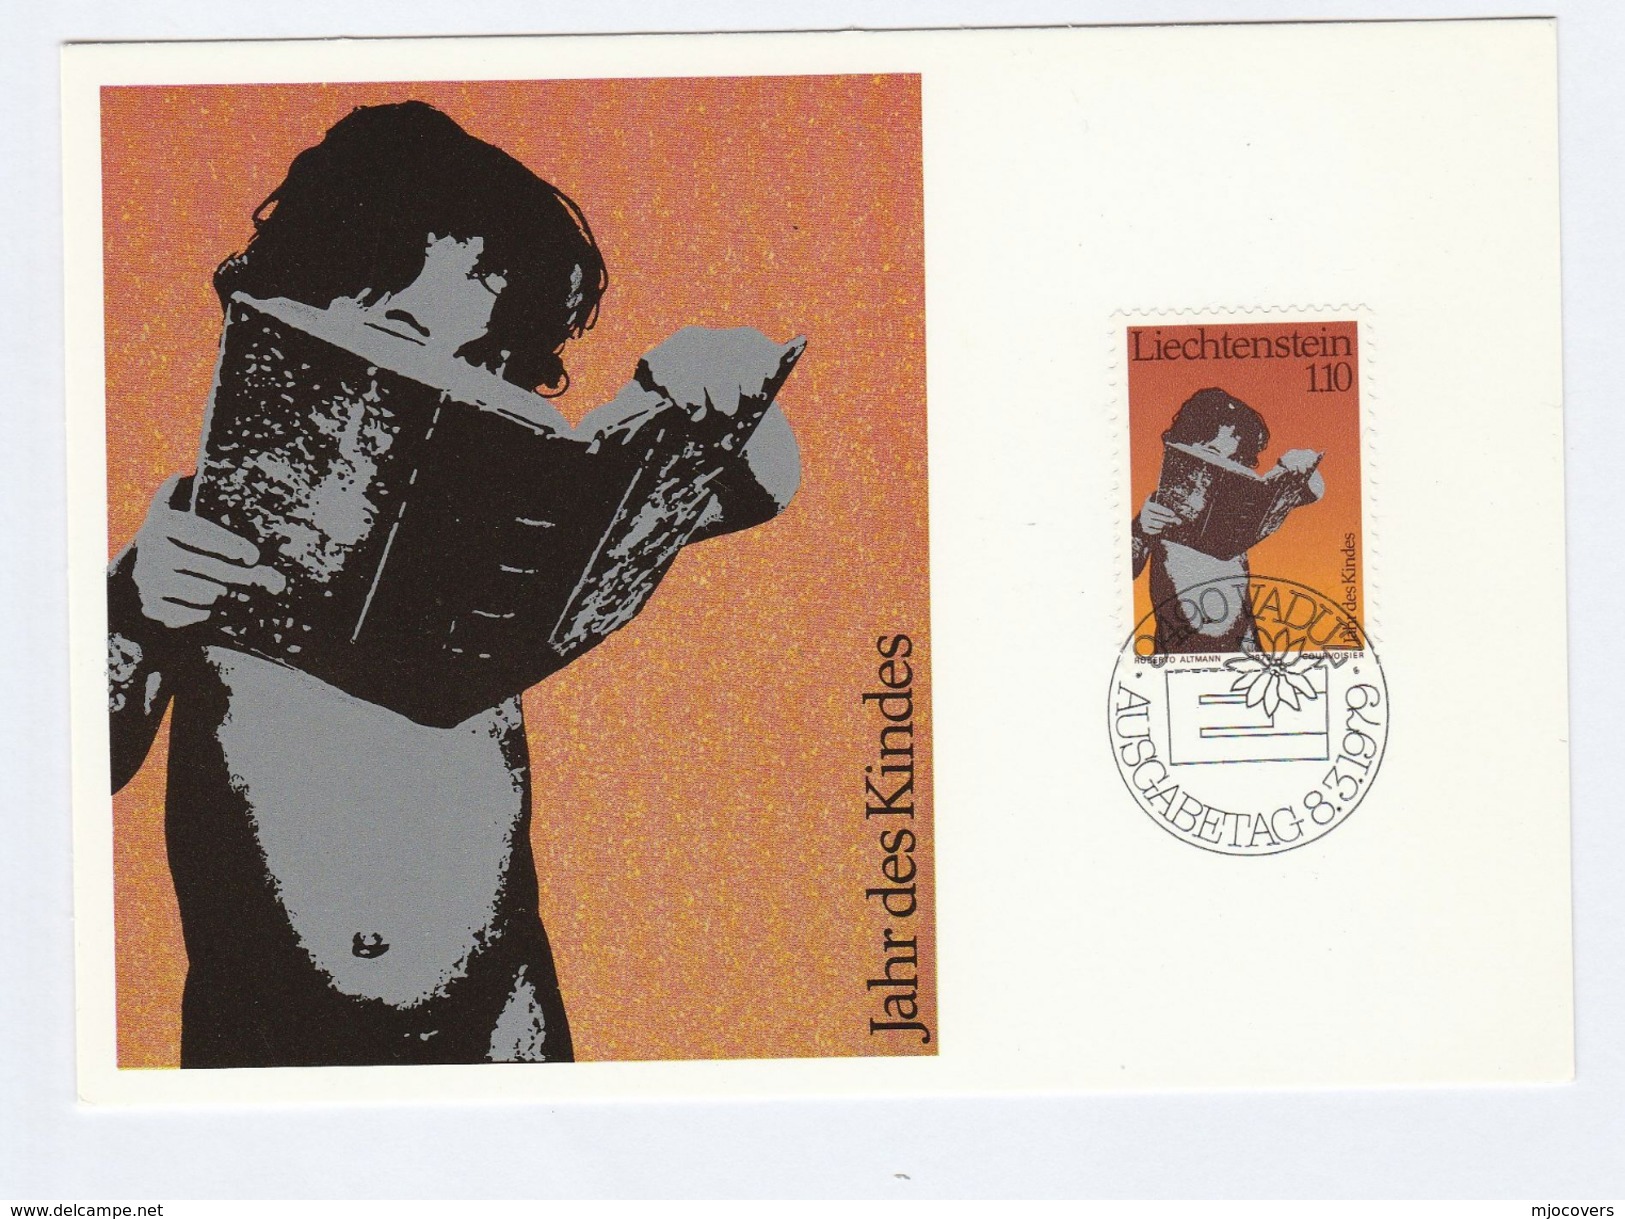 1989 LIECHTENSTEIN FDC Maximum Card  IYC CHILD READING, BOOK  Stamps Cover  Un United Nations - Maximumkarten (MC)